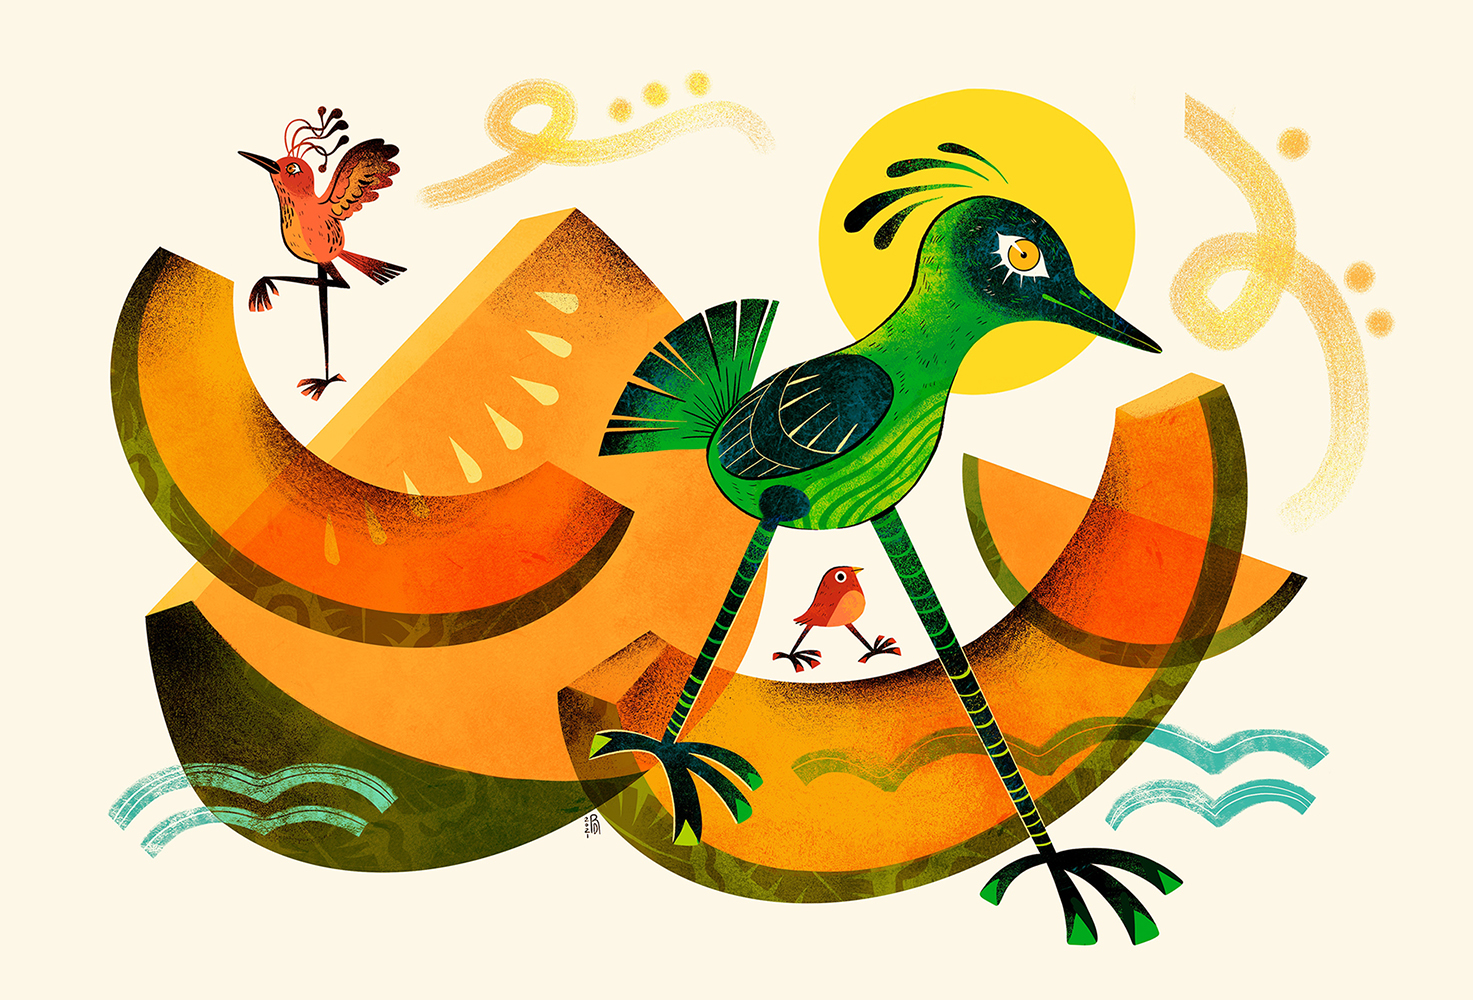 Birdland series: Cantaloupe Island (1 9 6 4) illustration